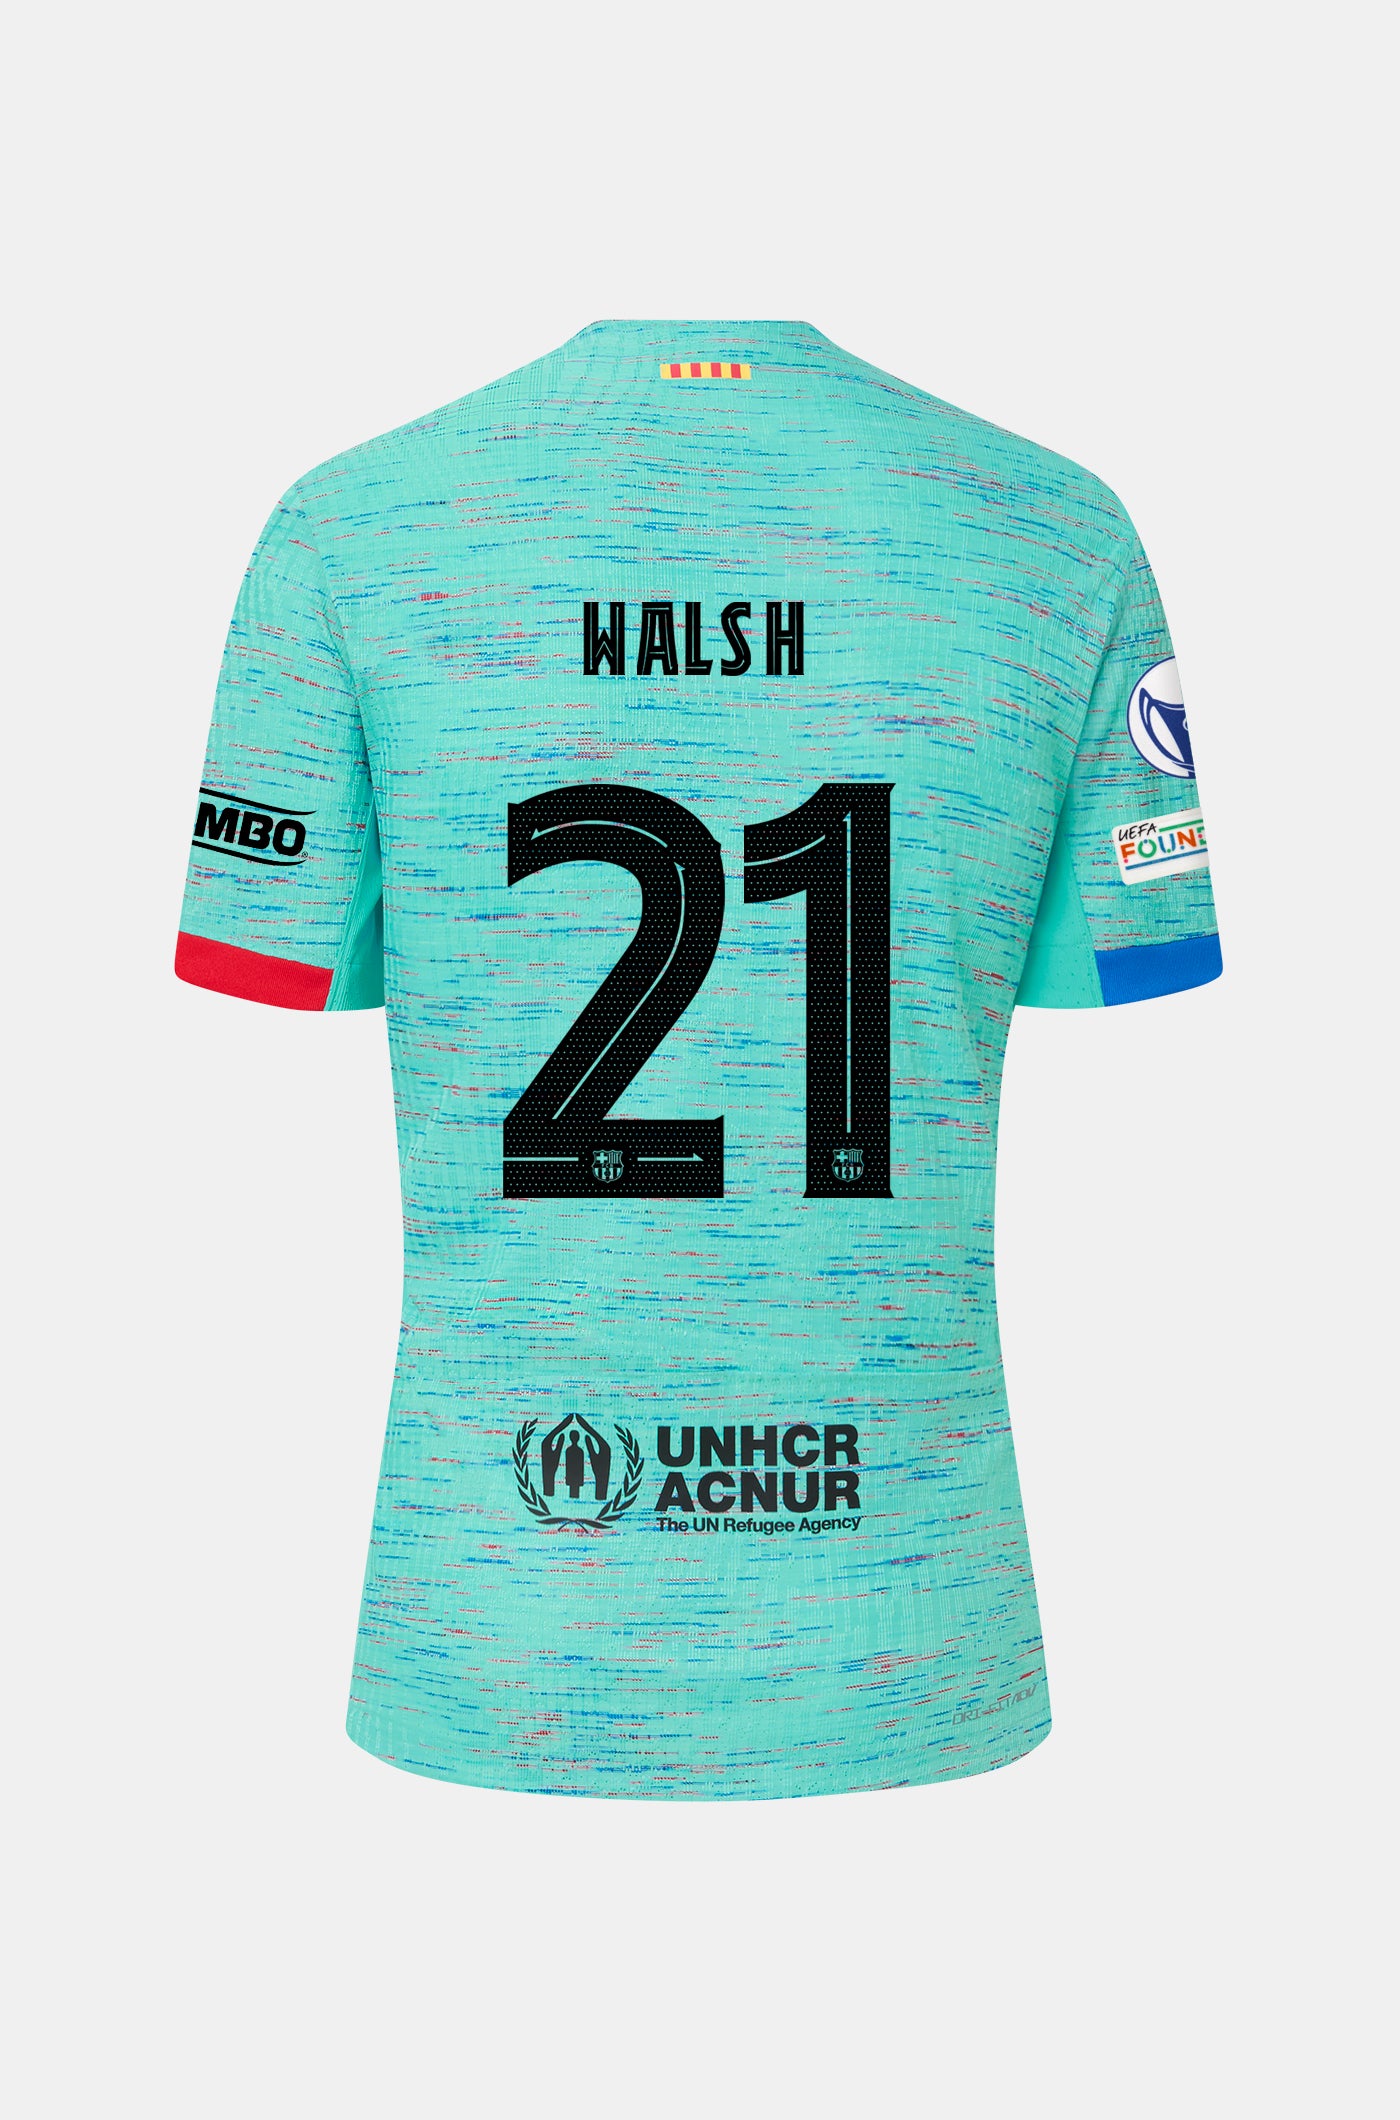 UWCL FC Barcelona third shirt 23/24 Player's Edition - WALSH